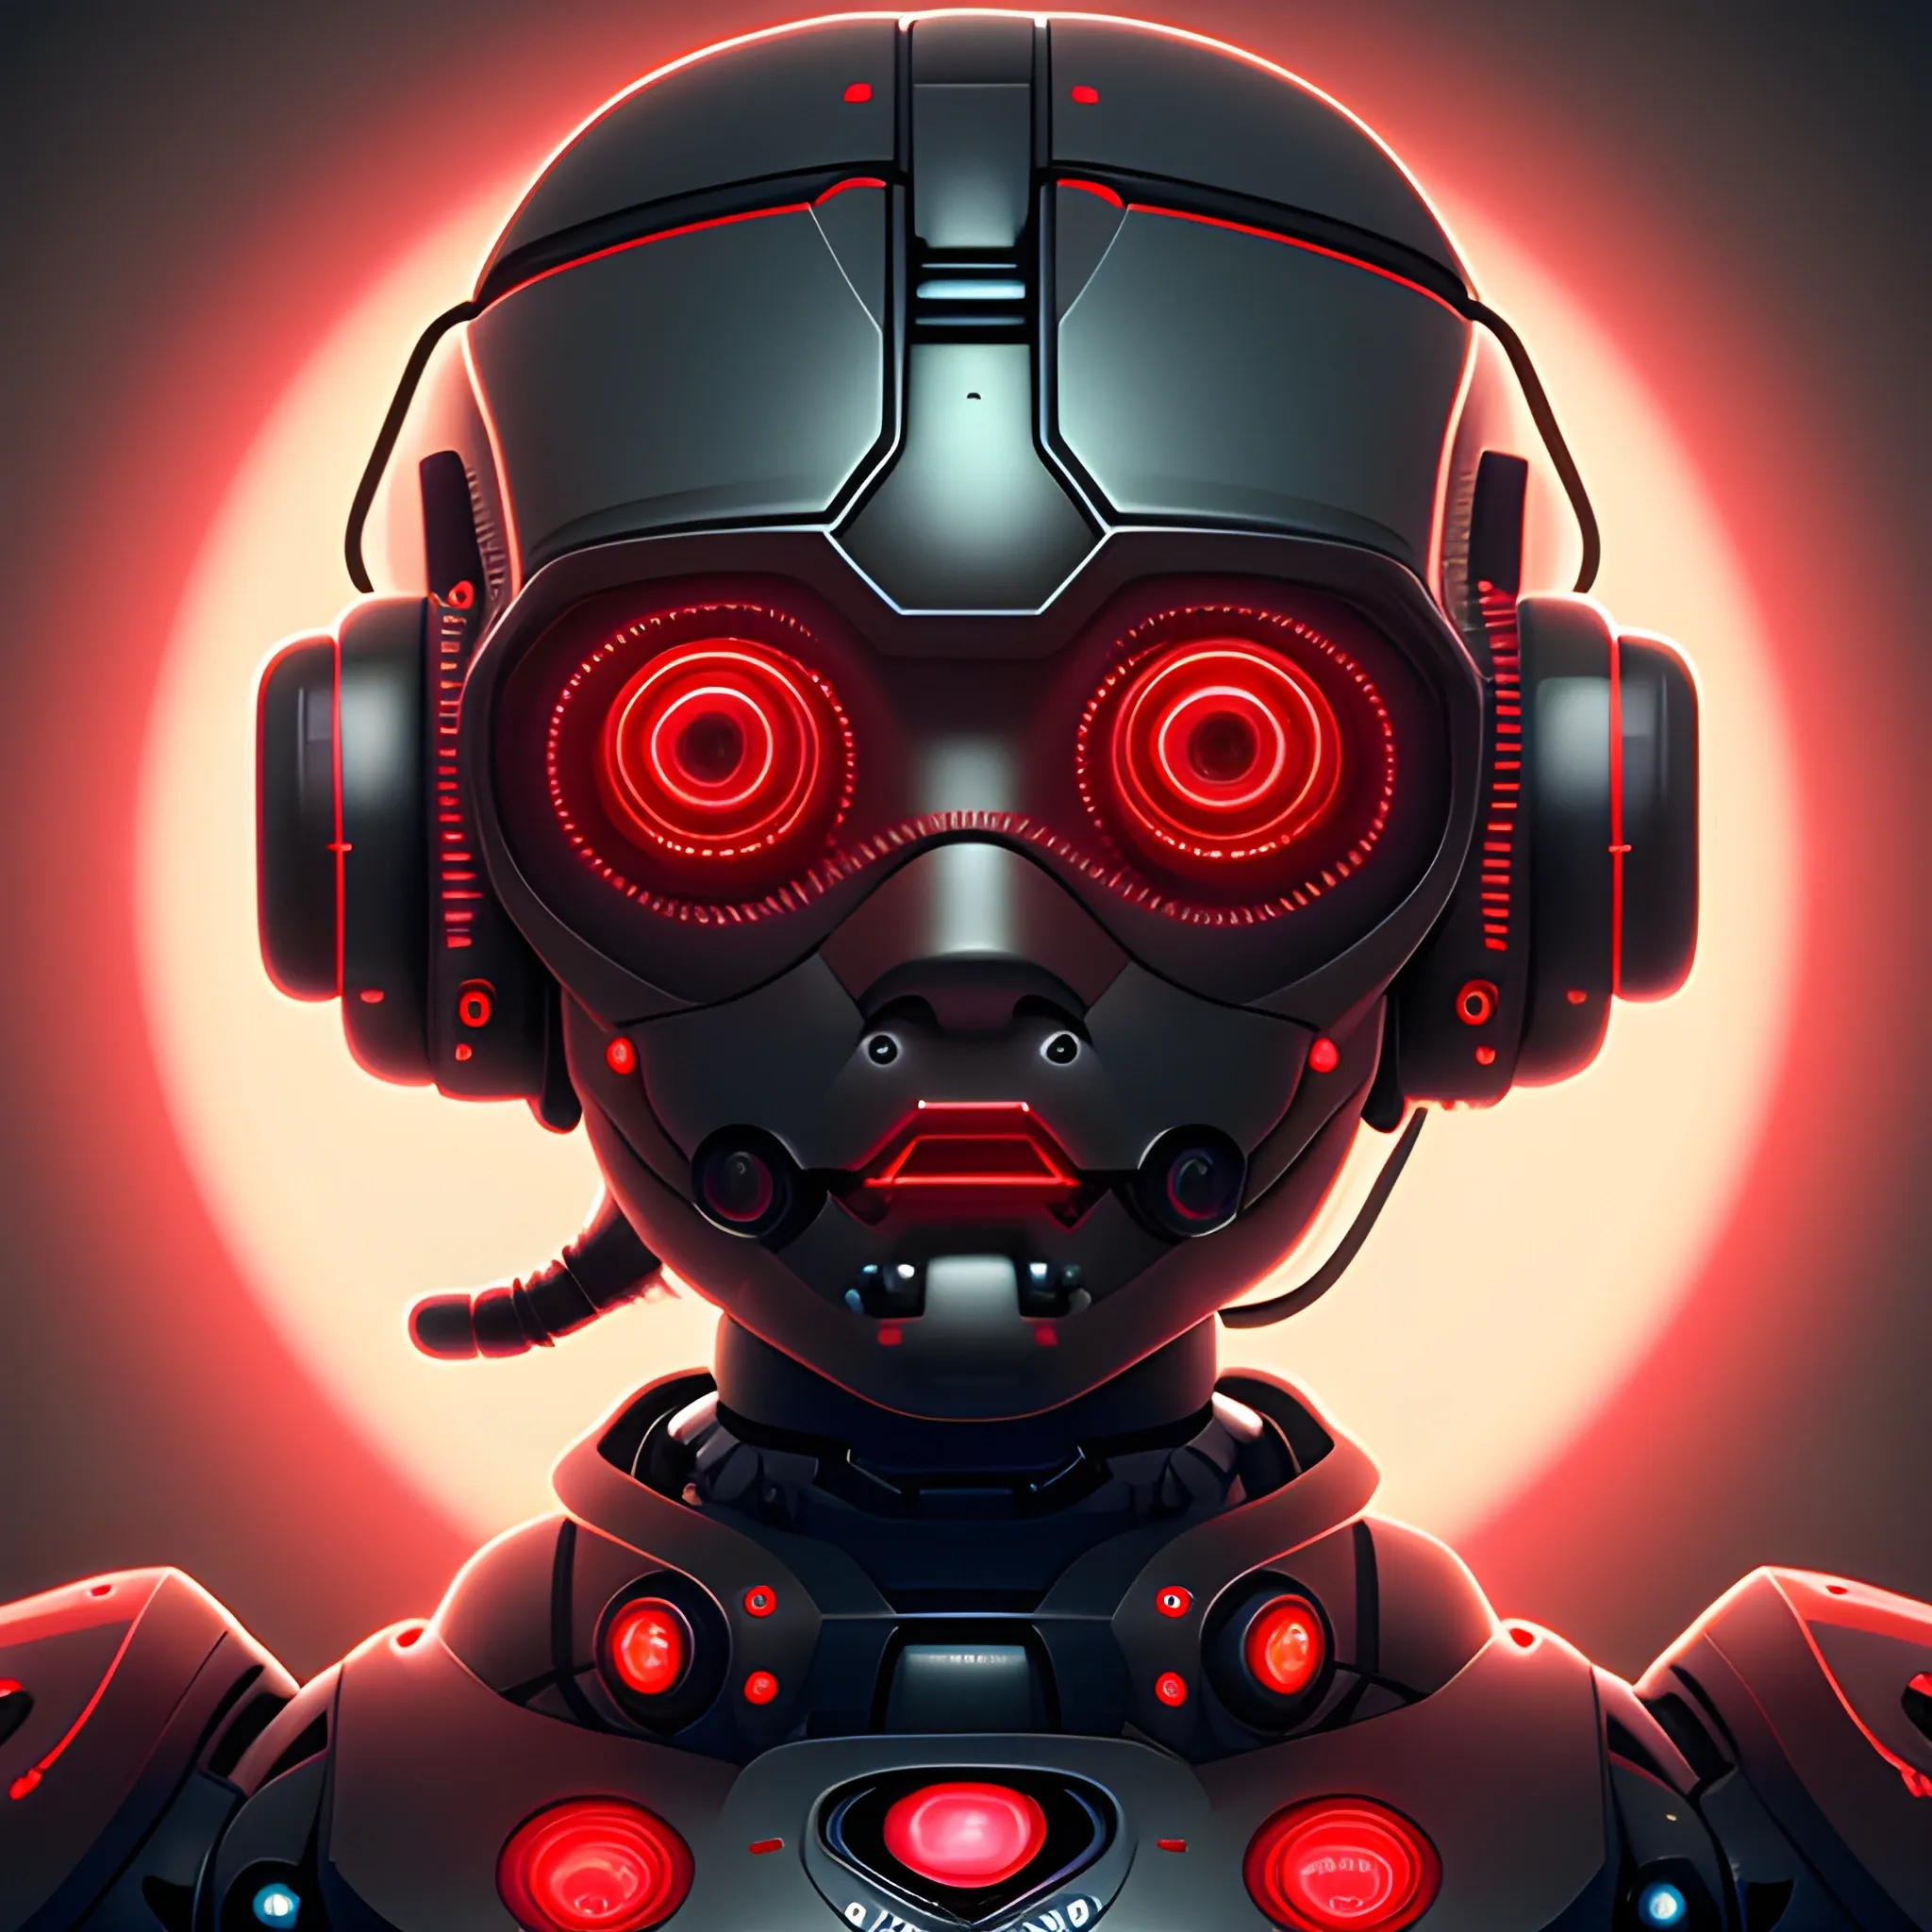 a beautiful portrait of a cute cyberpunk robots, red black color scheme, high key lighting, digital art, highly detailed, fine detail, intricate, ornate, complex